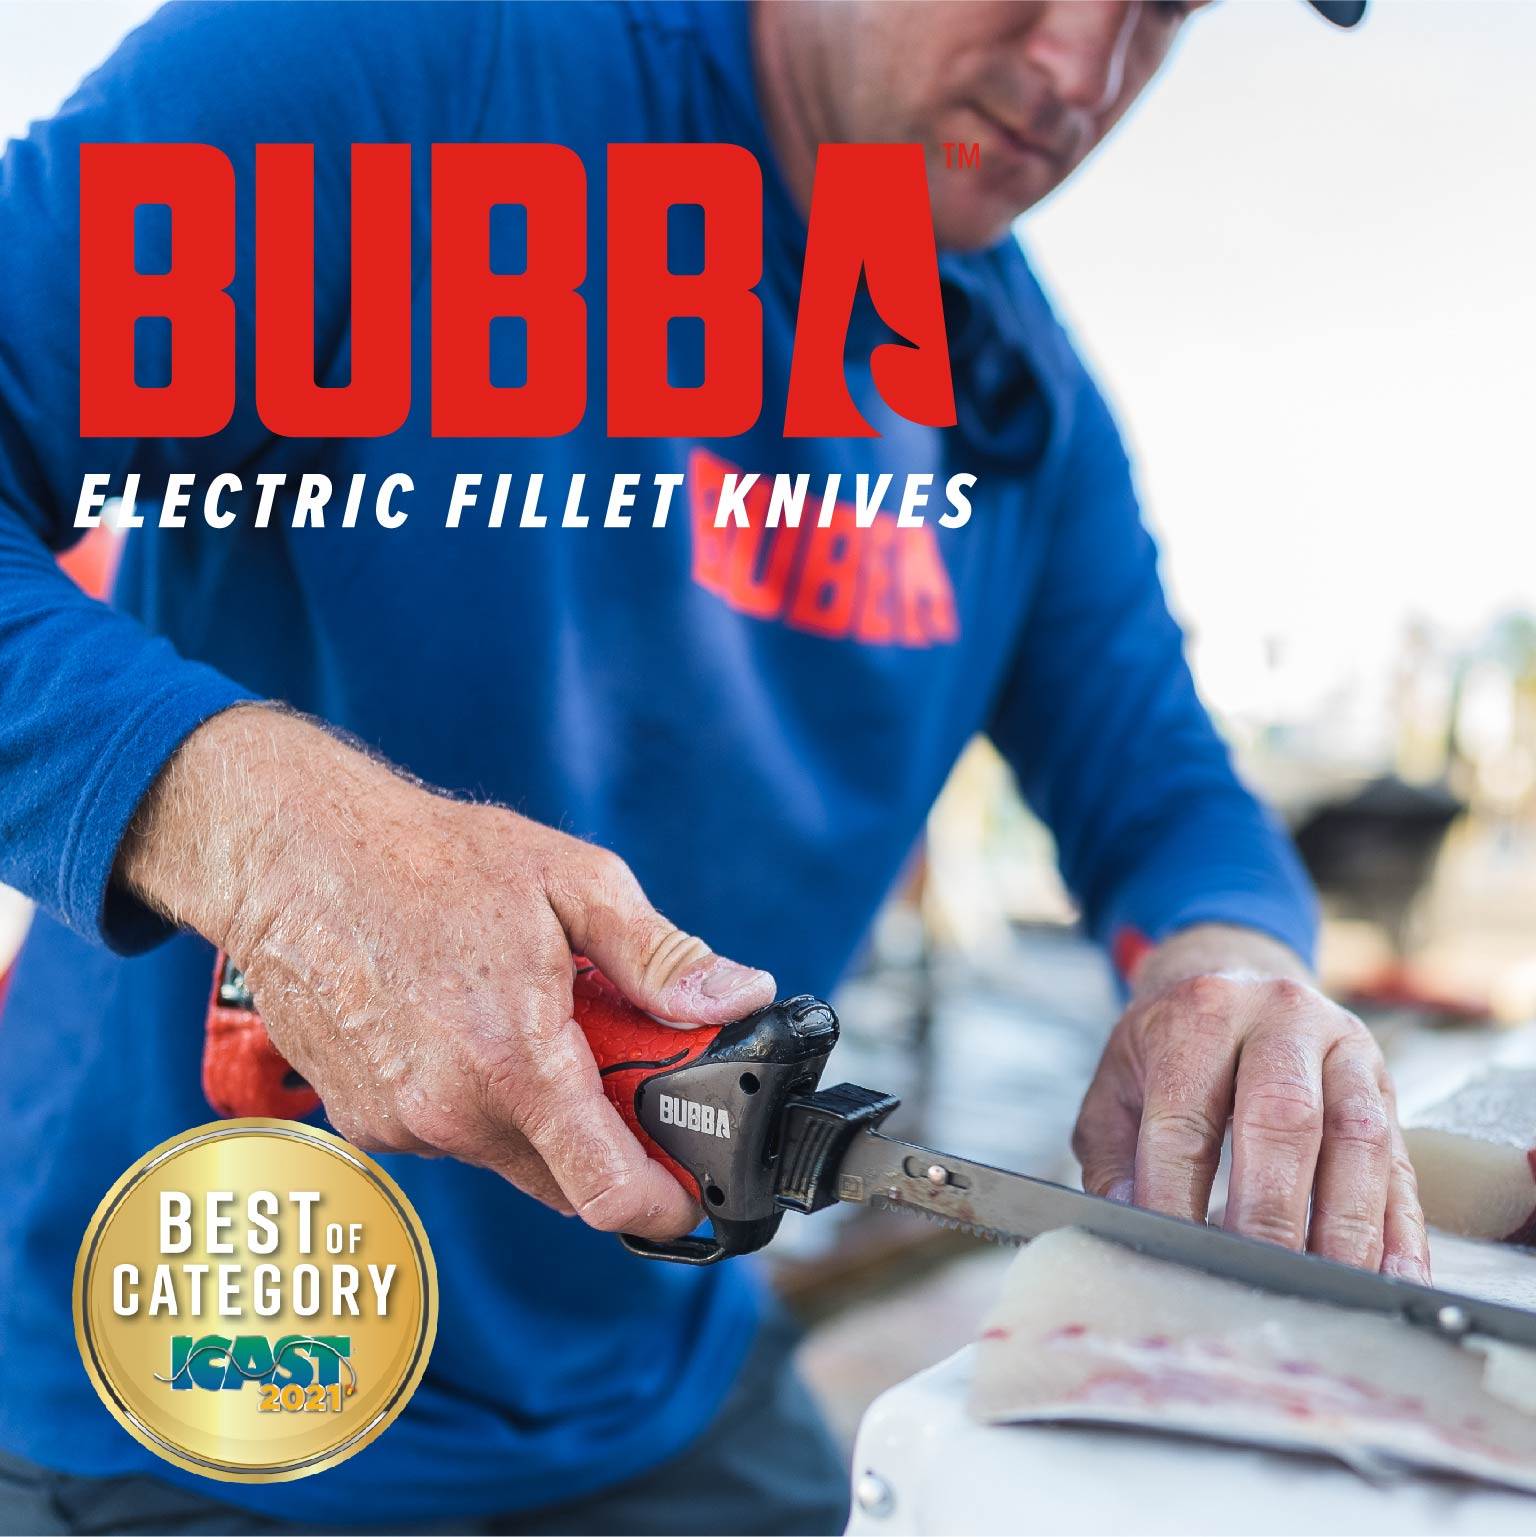 Bubba Blade 110V Electric Corded Fillet Knife